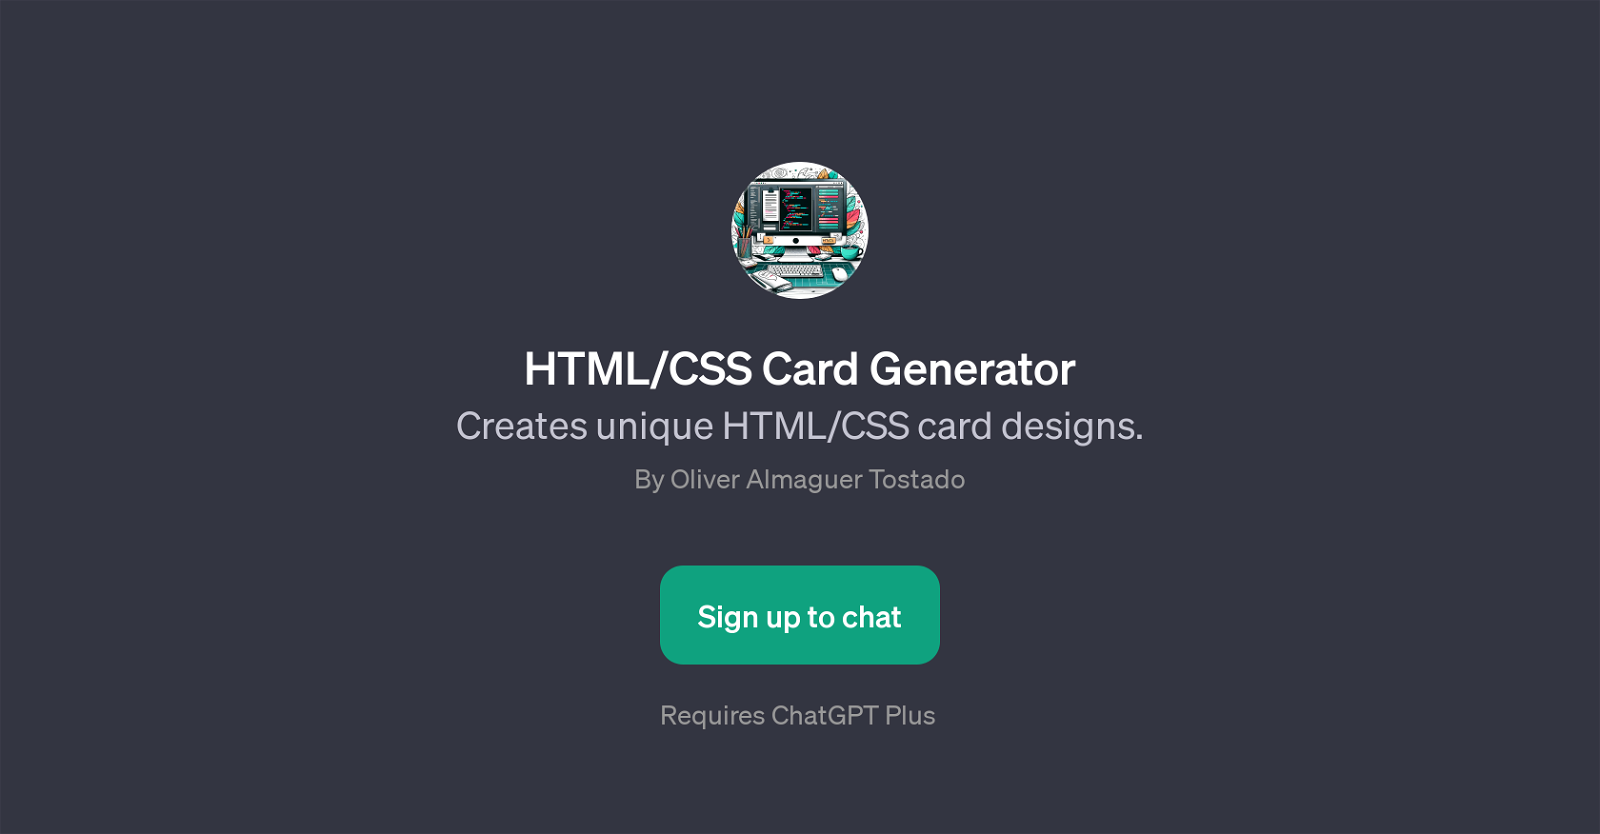 HTML/CSS Card Generator website